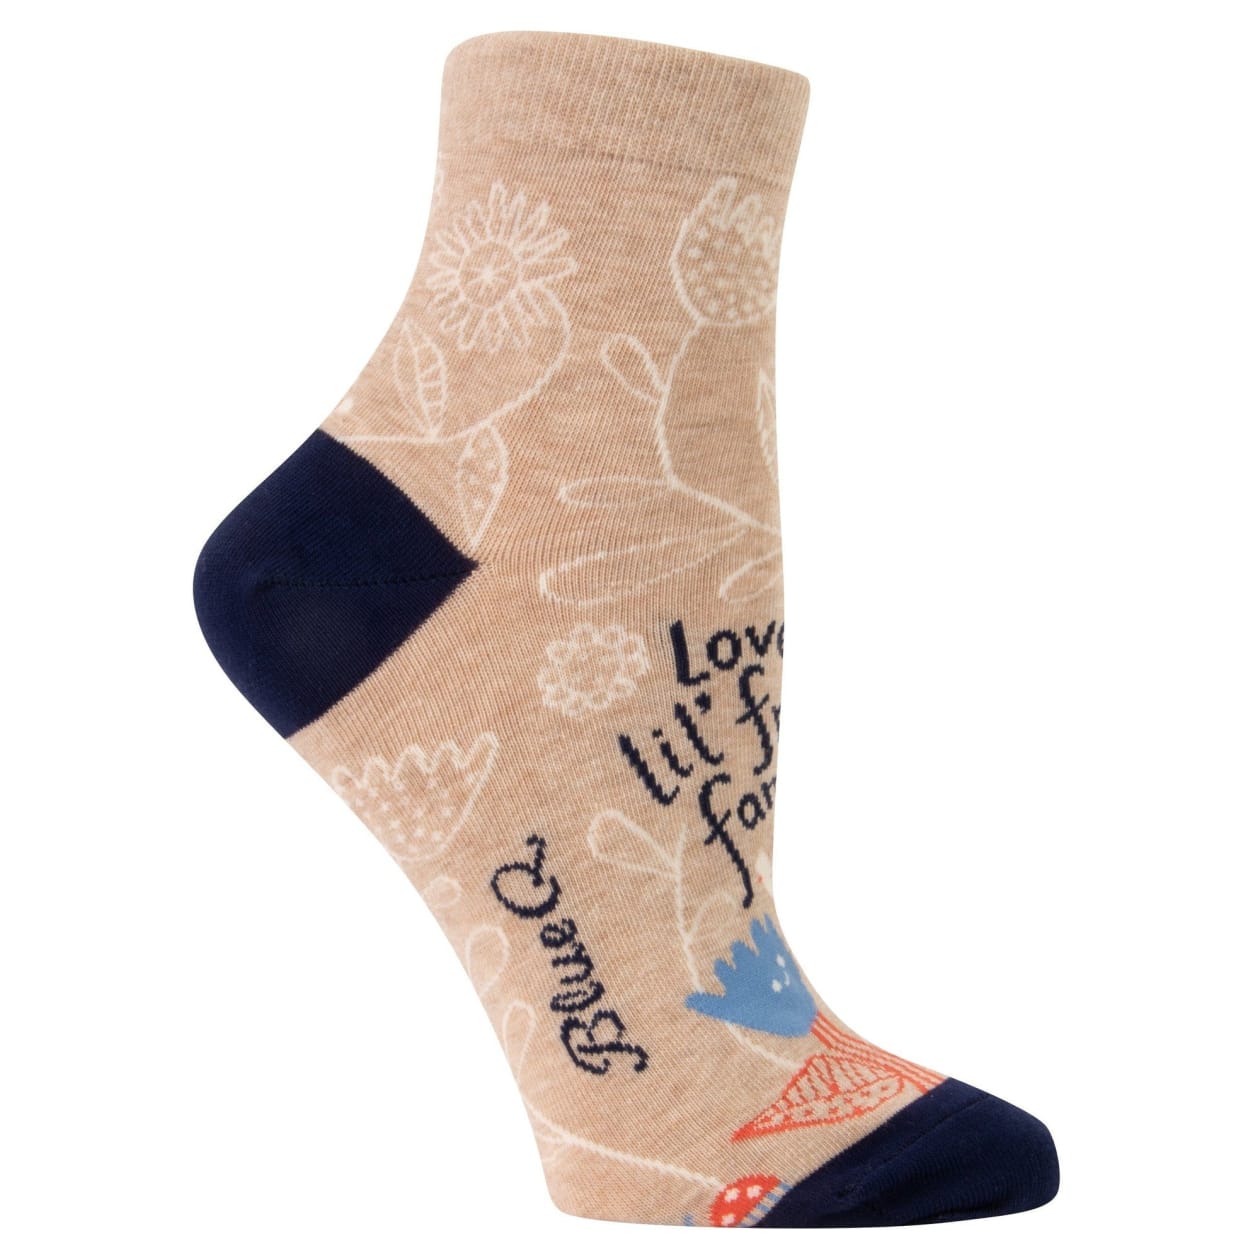 Love My Lil' Friend Family Women's Ankle Socks with Mushroom Flower Design | BlueQ at GetBullish